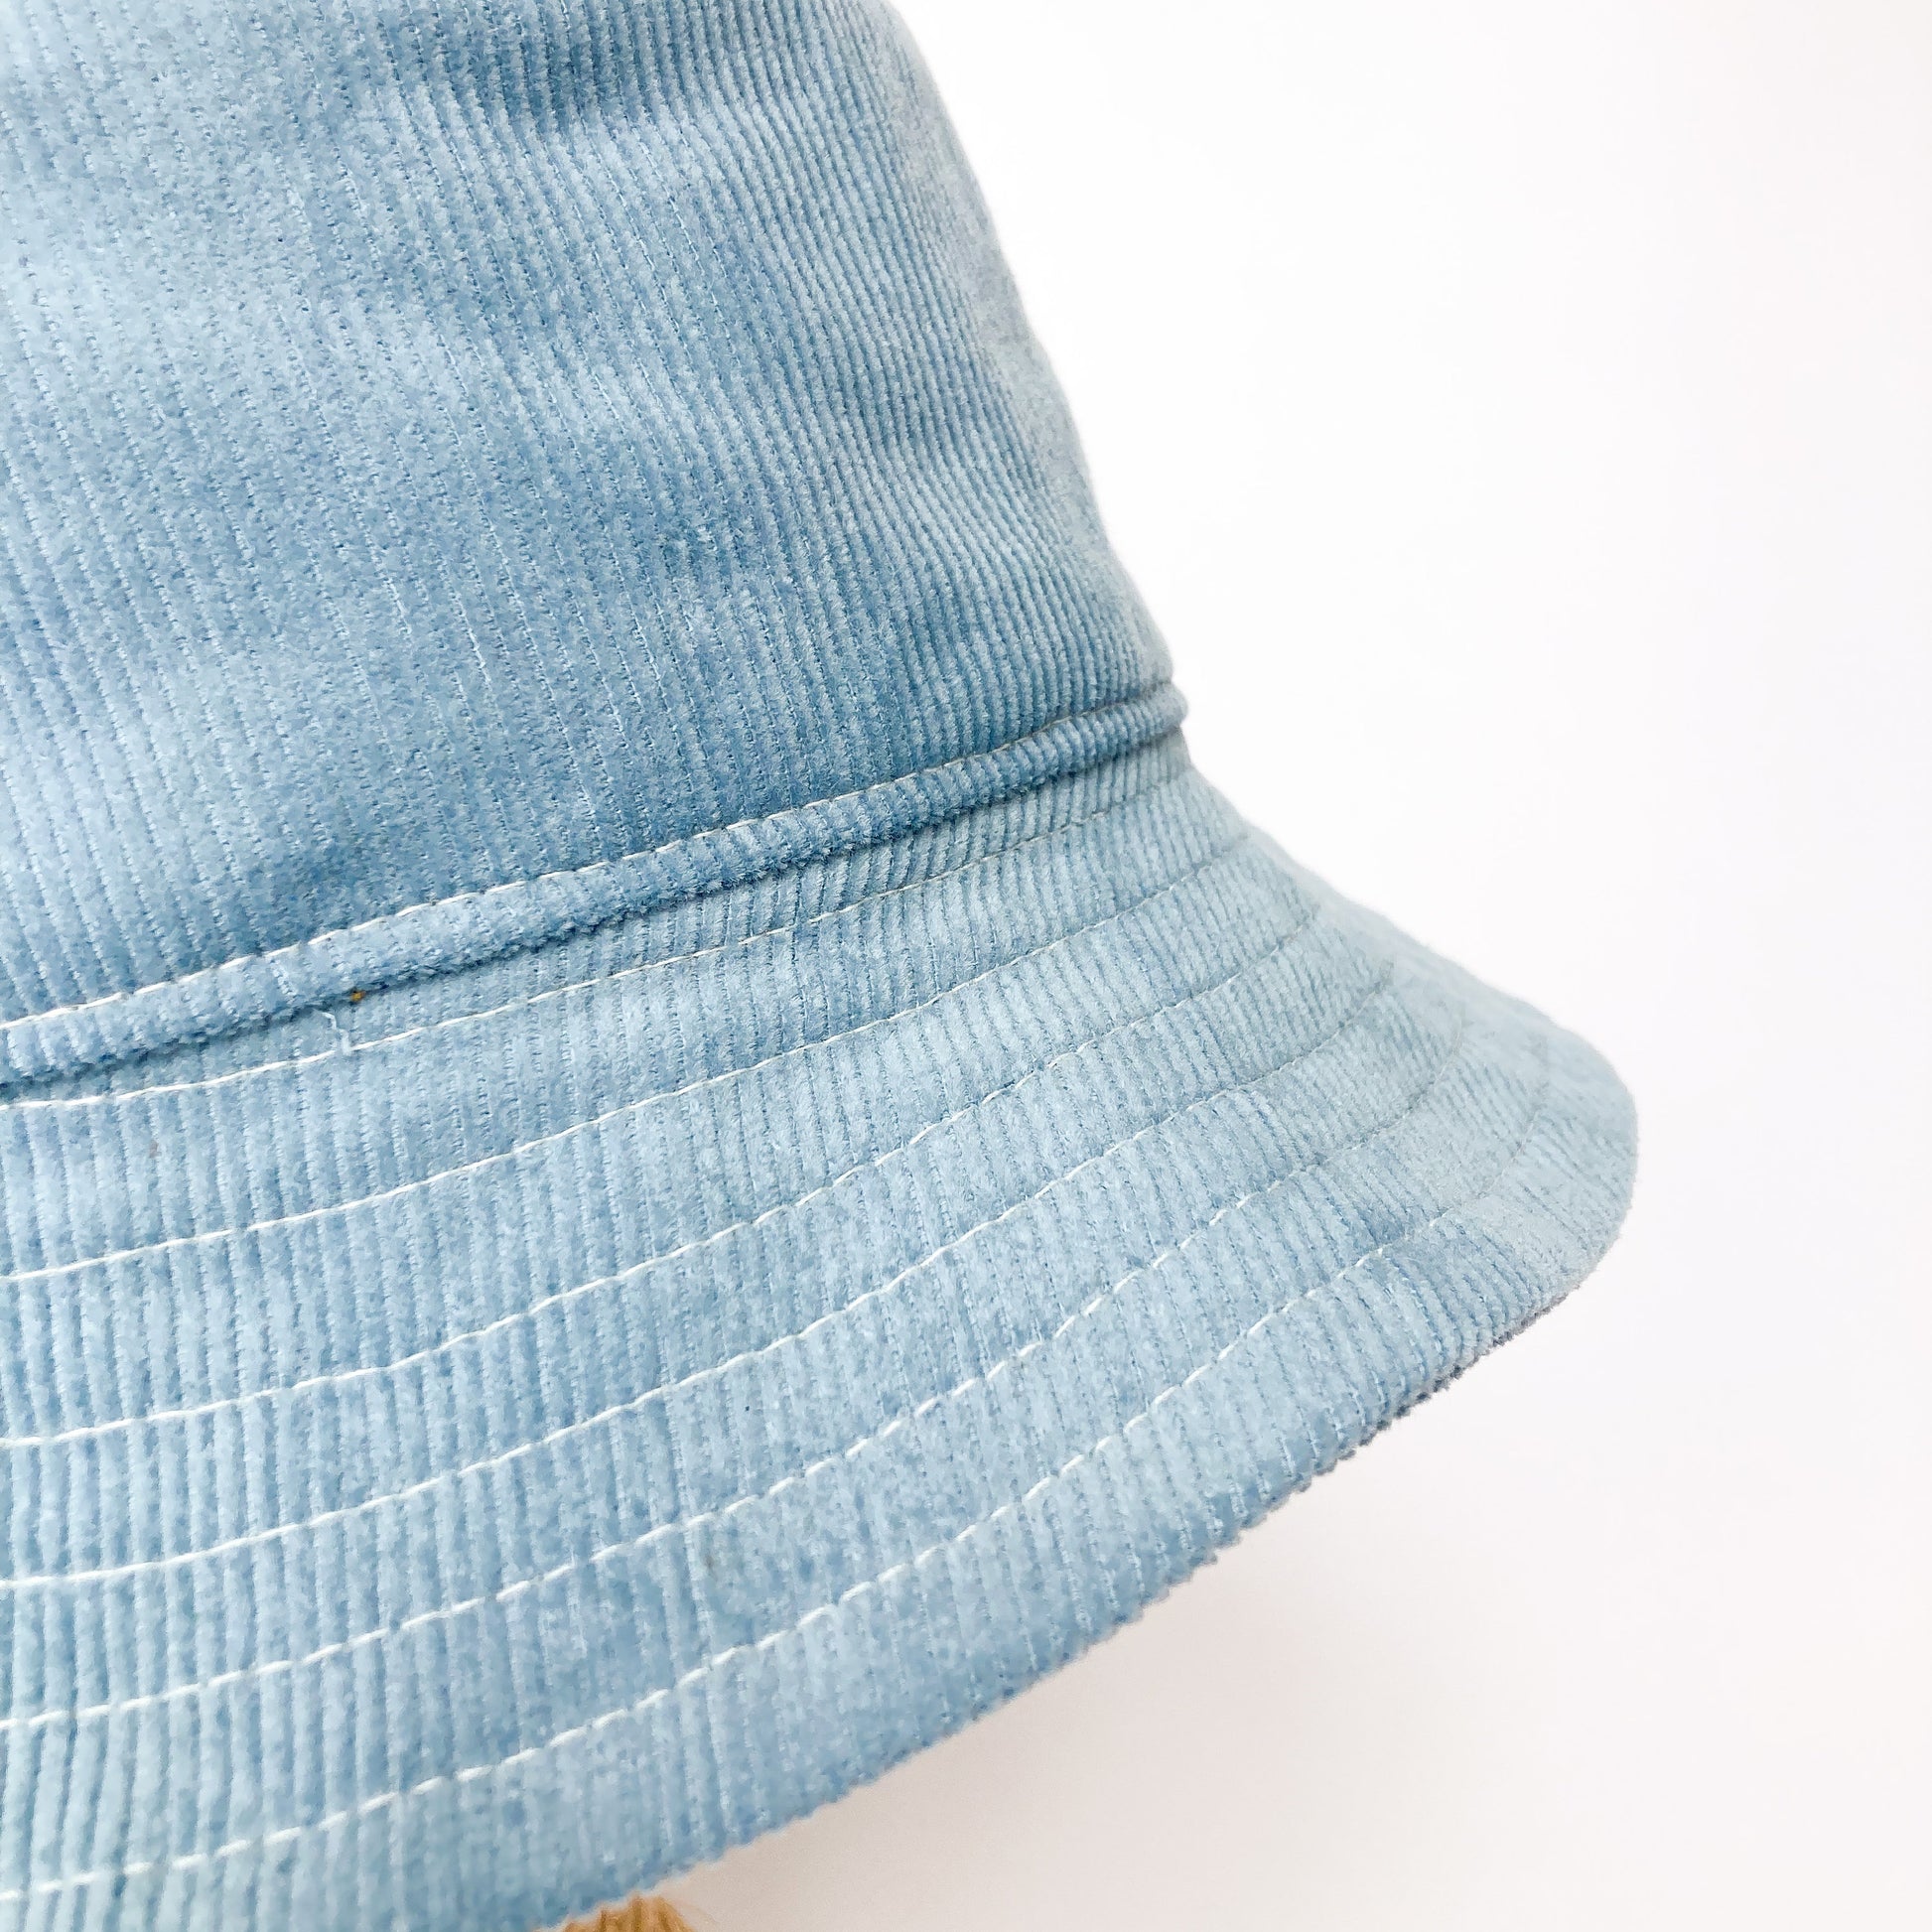 Corduroy Bucket Hat, Cotton Summer Hat, Blue Corduroy Hat, Beach Bucket Hat, Boho Sun Hat, Bucket Hat Women, Brim Womans Hat, Fabric Cap